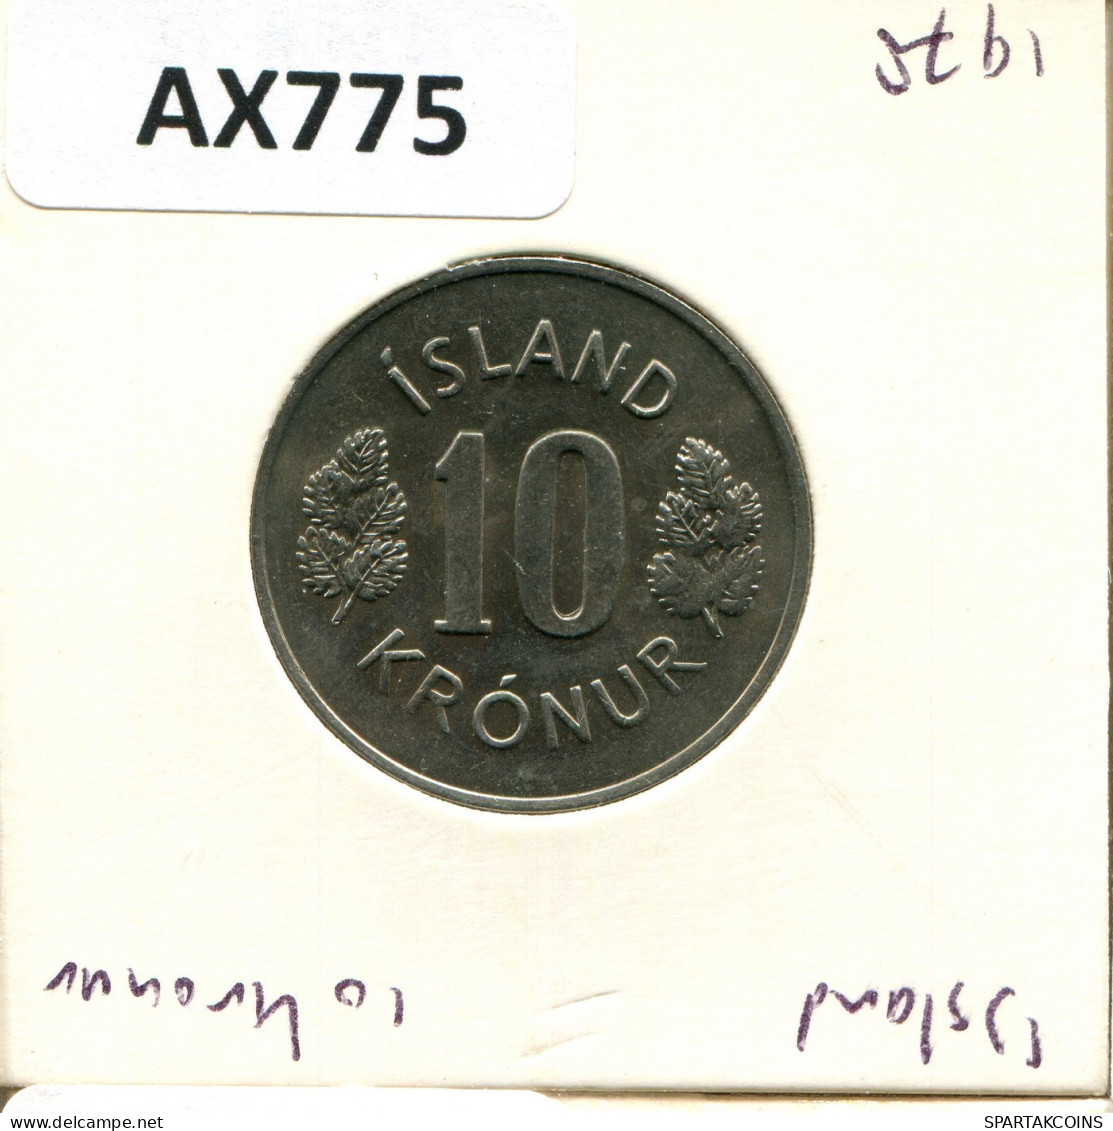 10 KRONUR 1978 ISLANDIA ICELAND Moneda #AX775.E.A - Island